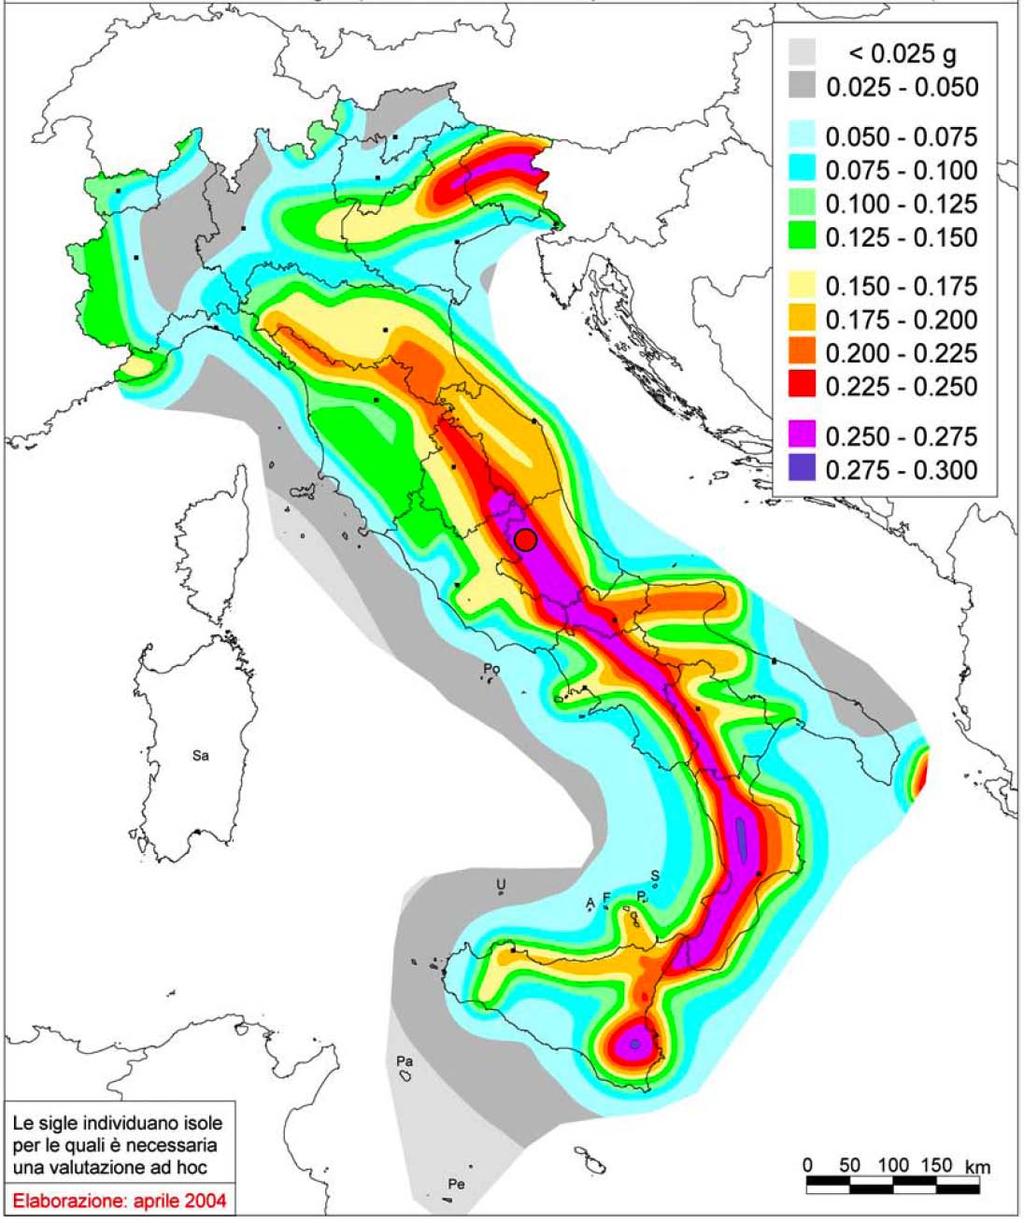 2009 L Aquila Earthquake Sequence Tectonic context Zone